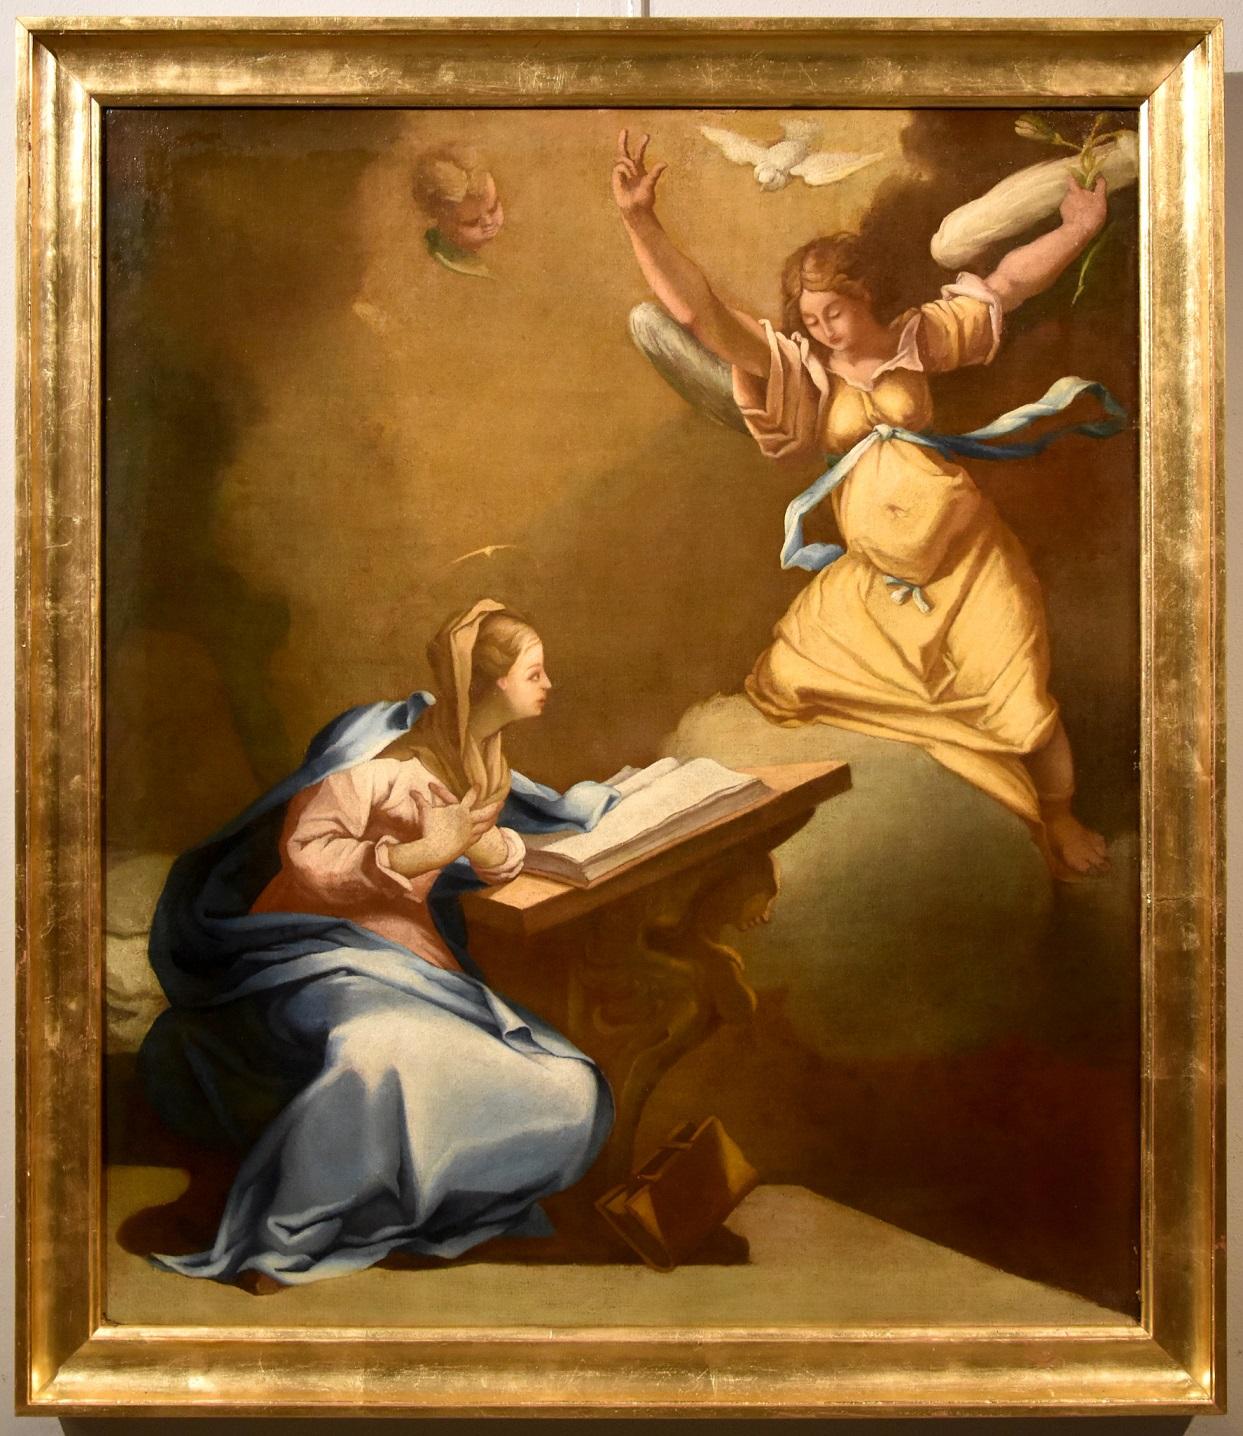 Annunciation De Matteis Paint Oil on canvas Old master 17/18th Century Leonardo - Painting by Paolo De Matteis (Piano Vetrale, 1662 - Naples, 1728)